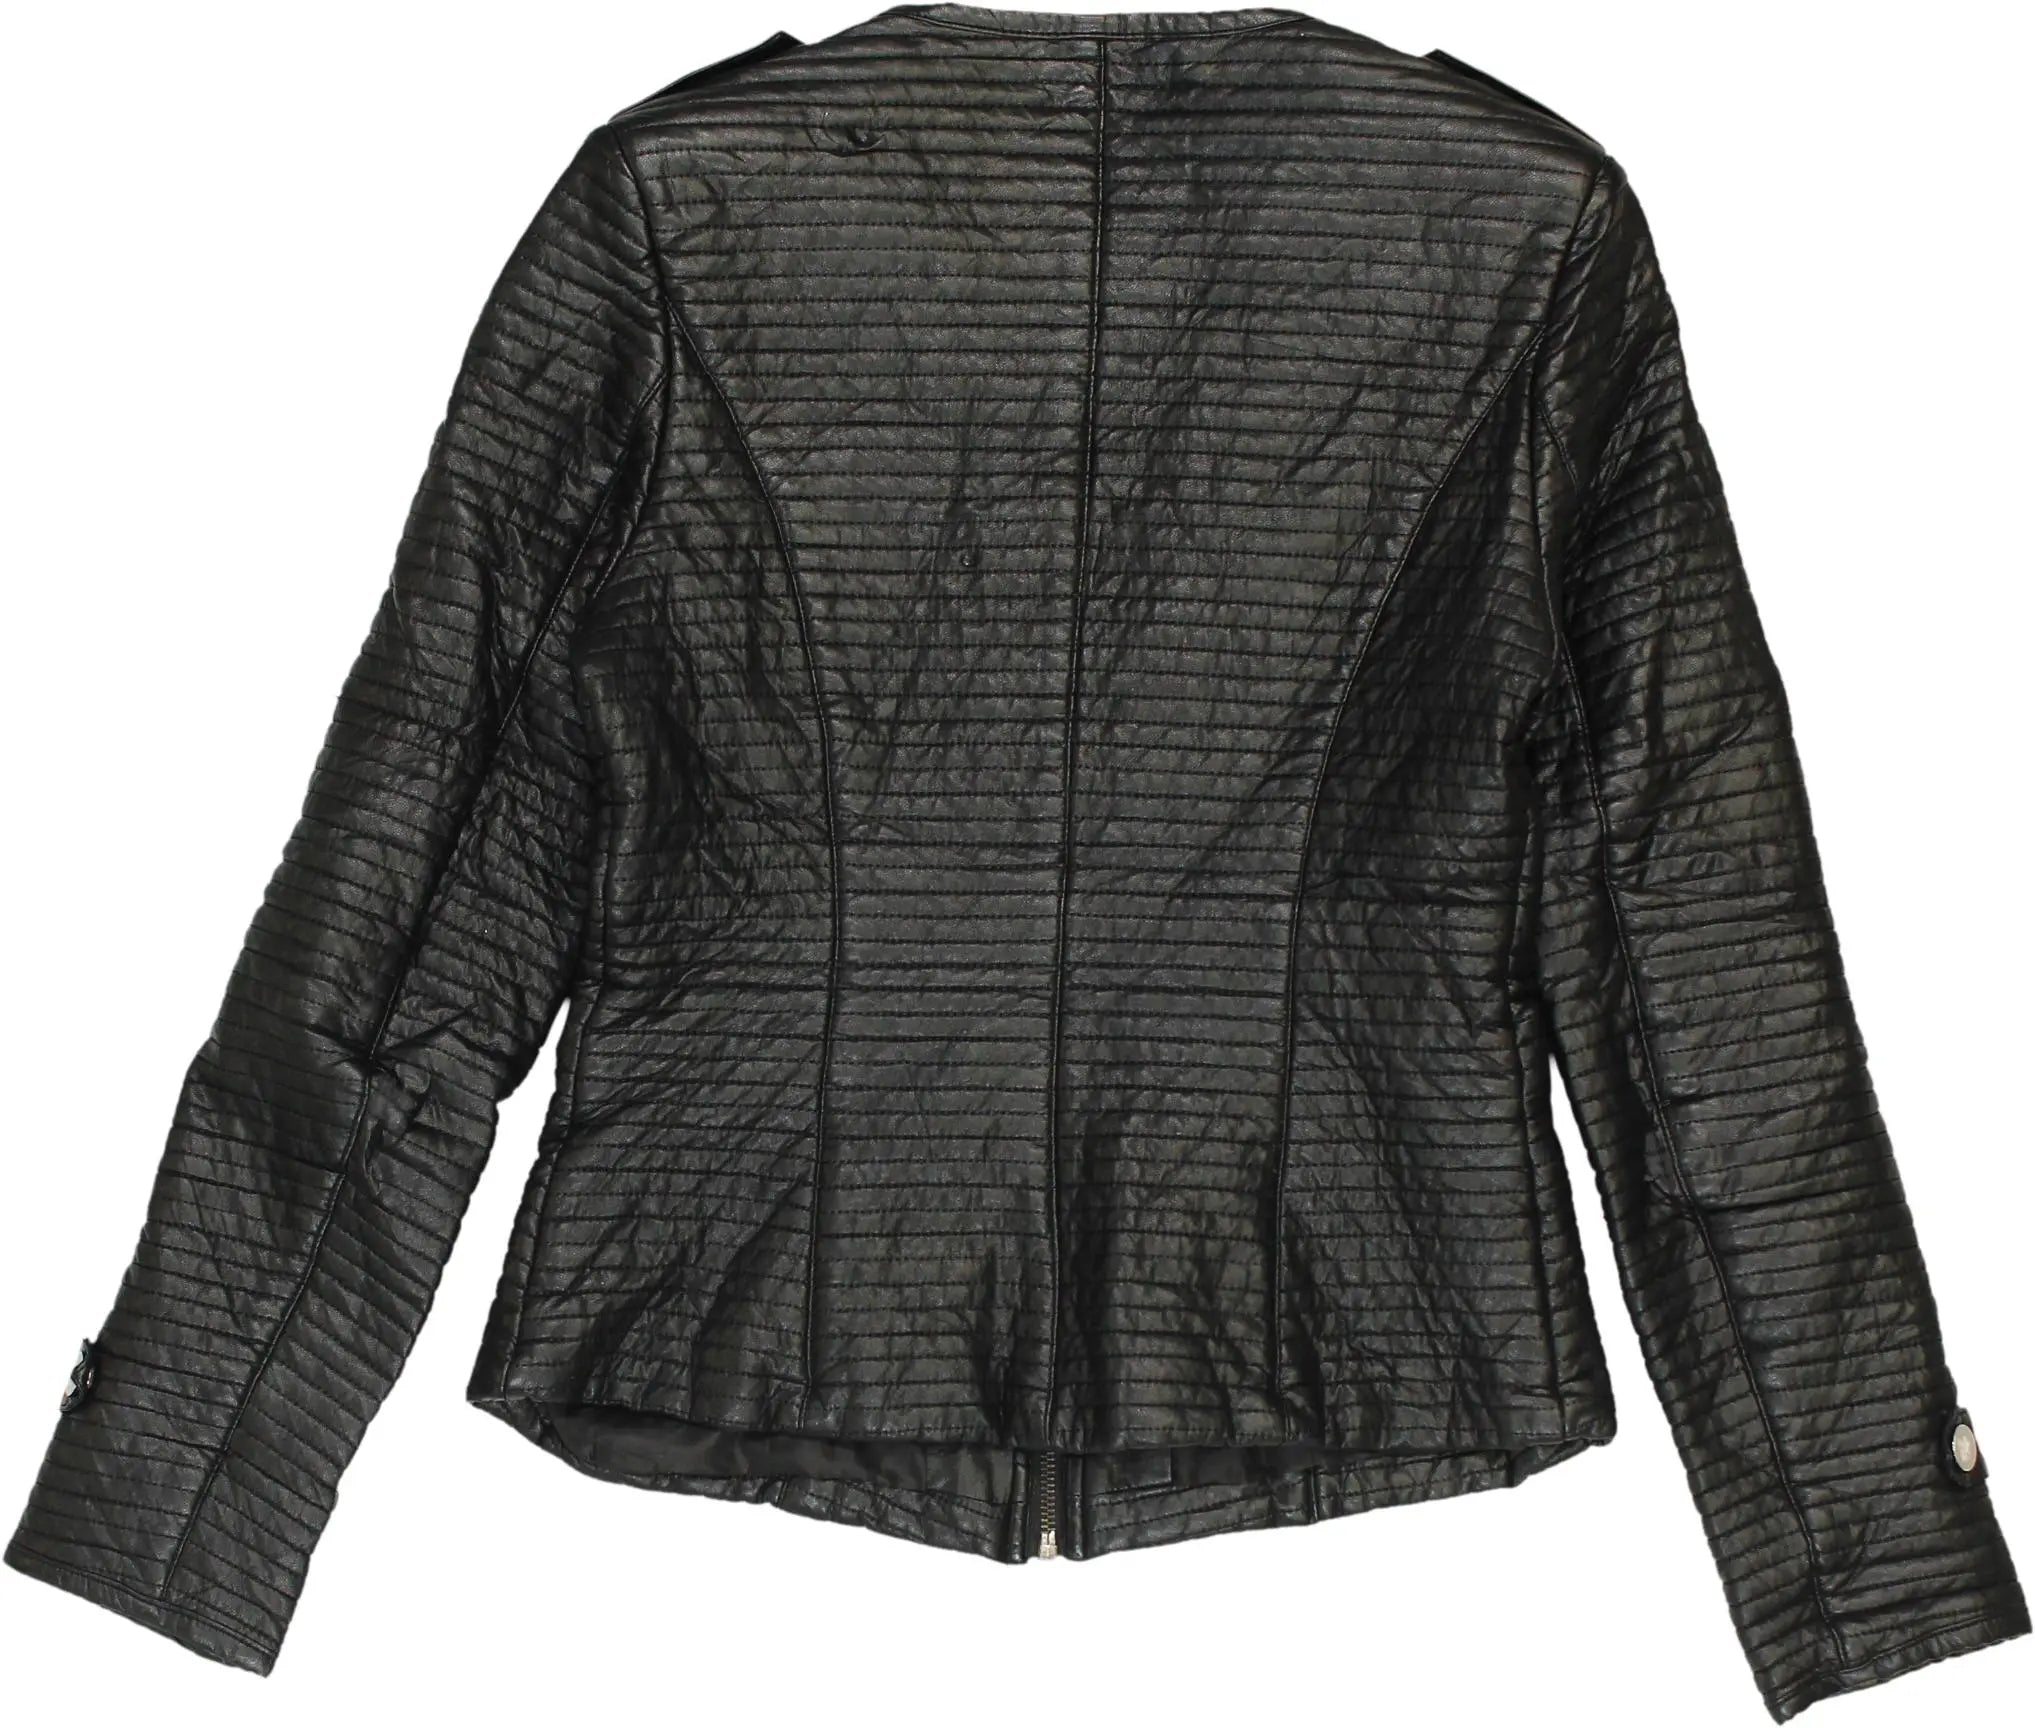 Drole de Copine - Vegan Leather Jacket- ThriftTale.com - Vintage and second handclothing